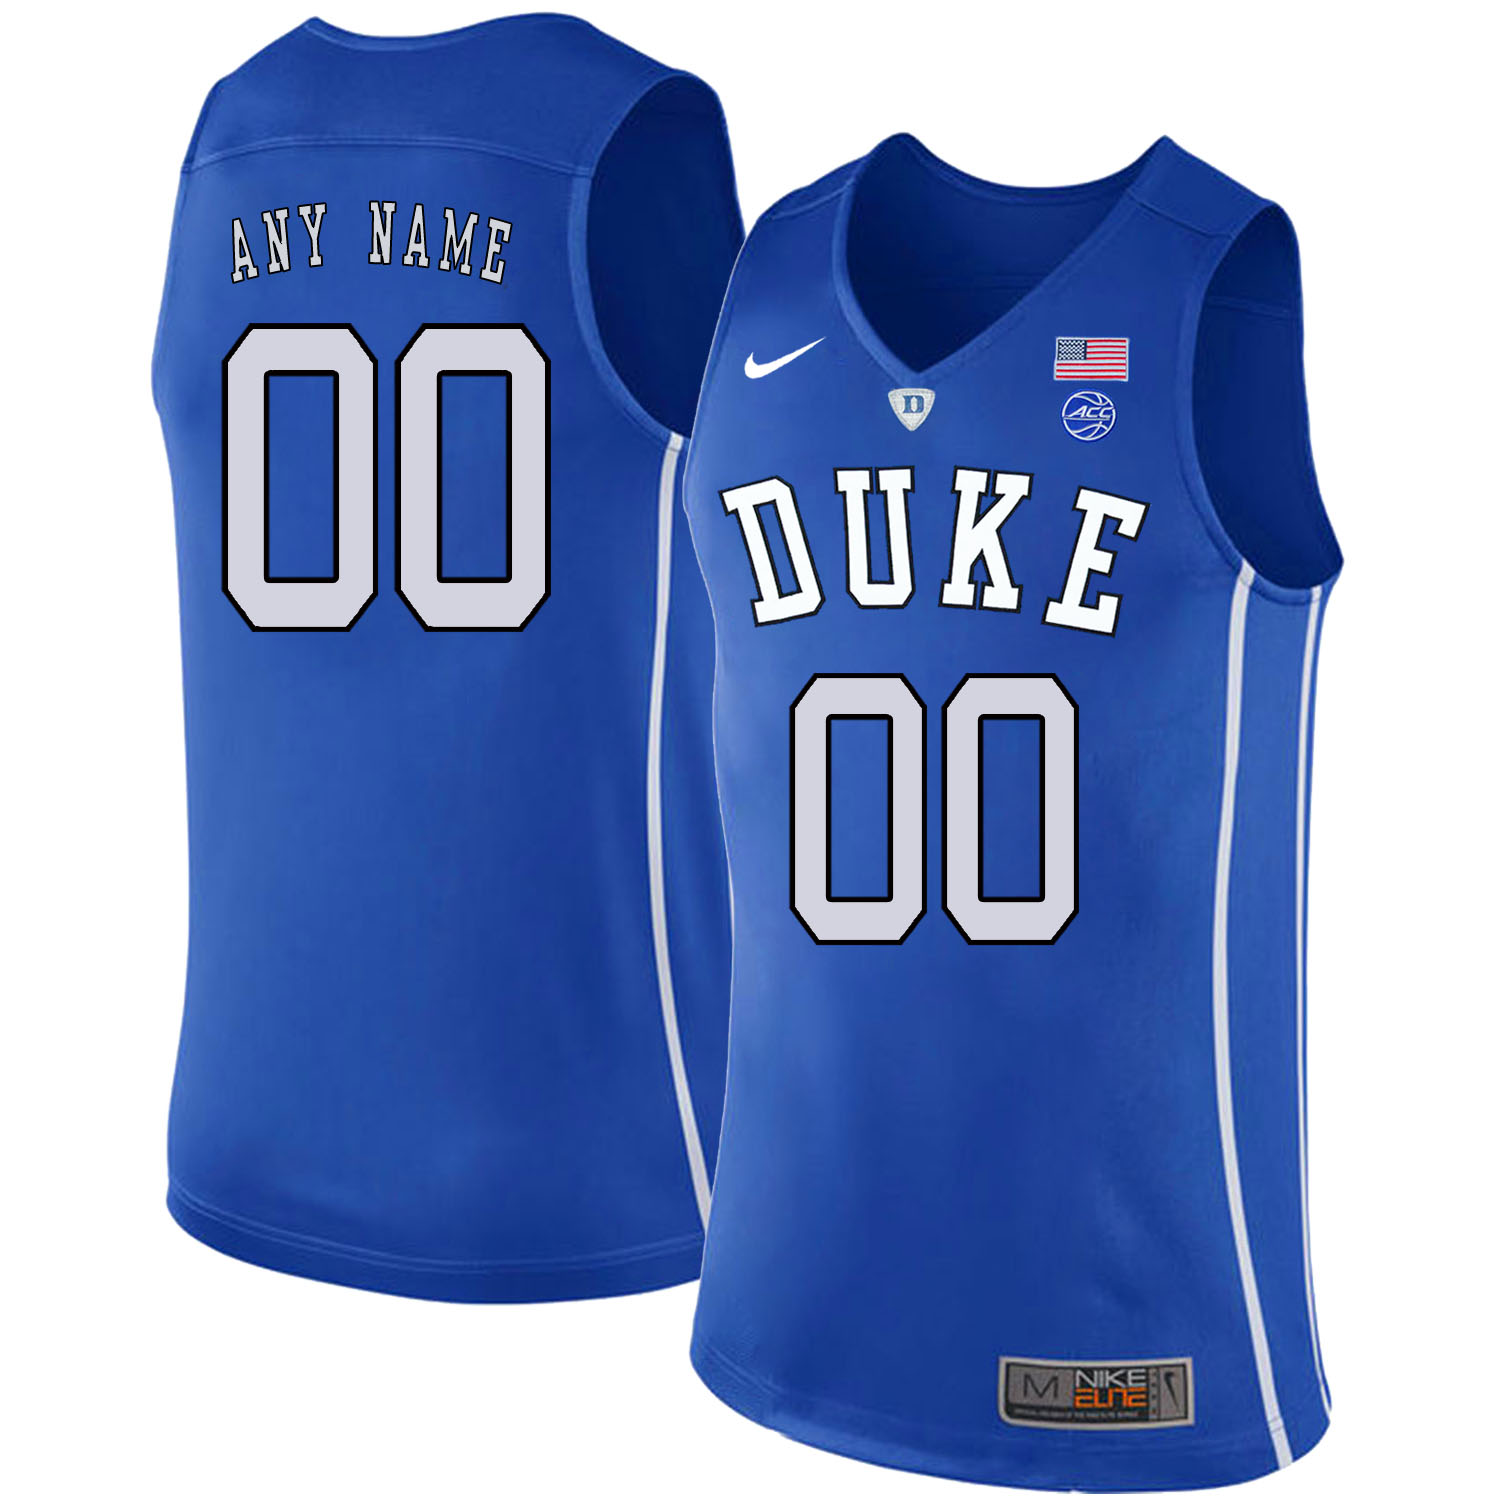 Duke Blue Devils Men's Customized Blue Nike College Basketball Jersey